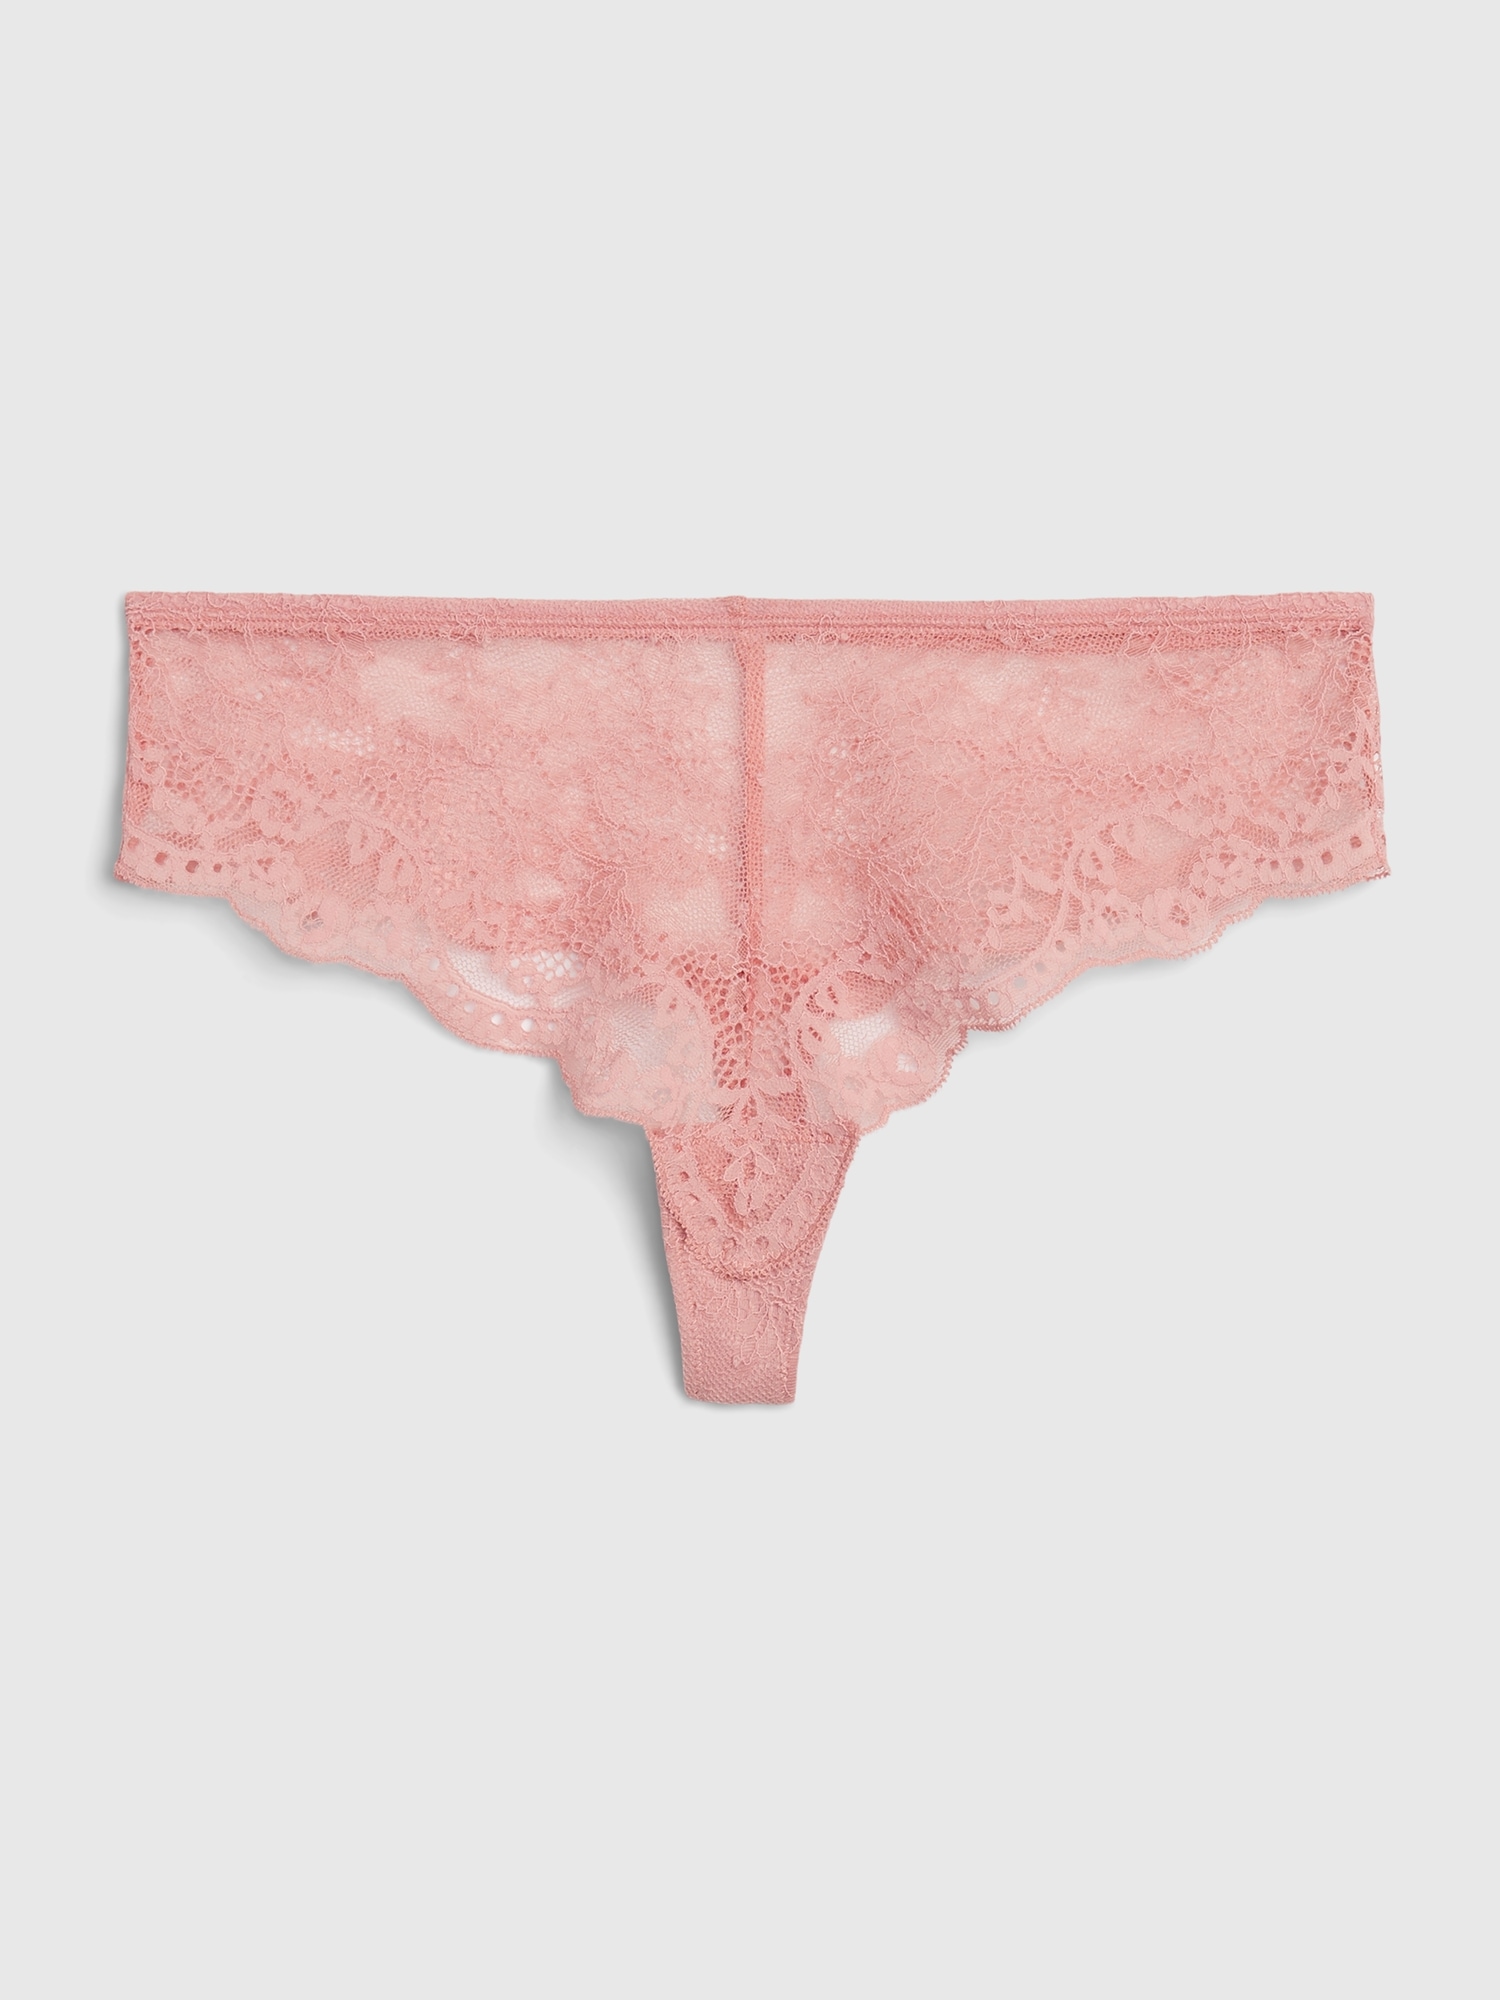 QTBIUQ WomenLace Underwear Lingerie Thongs Panties Ladies Underwear  Underpants(Pink,One Size)